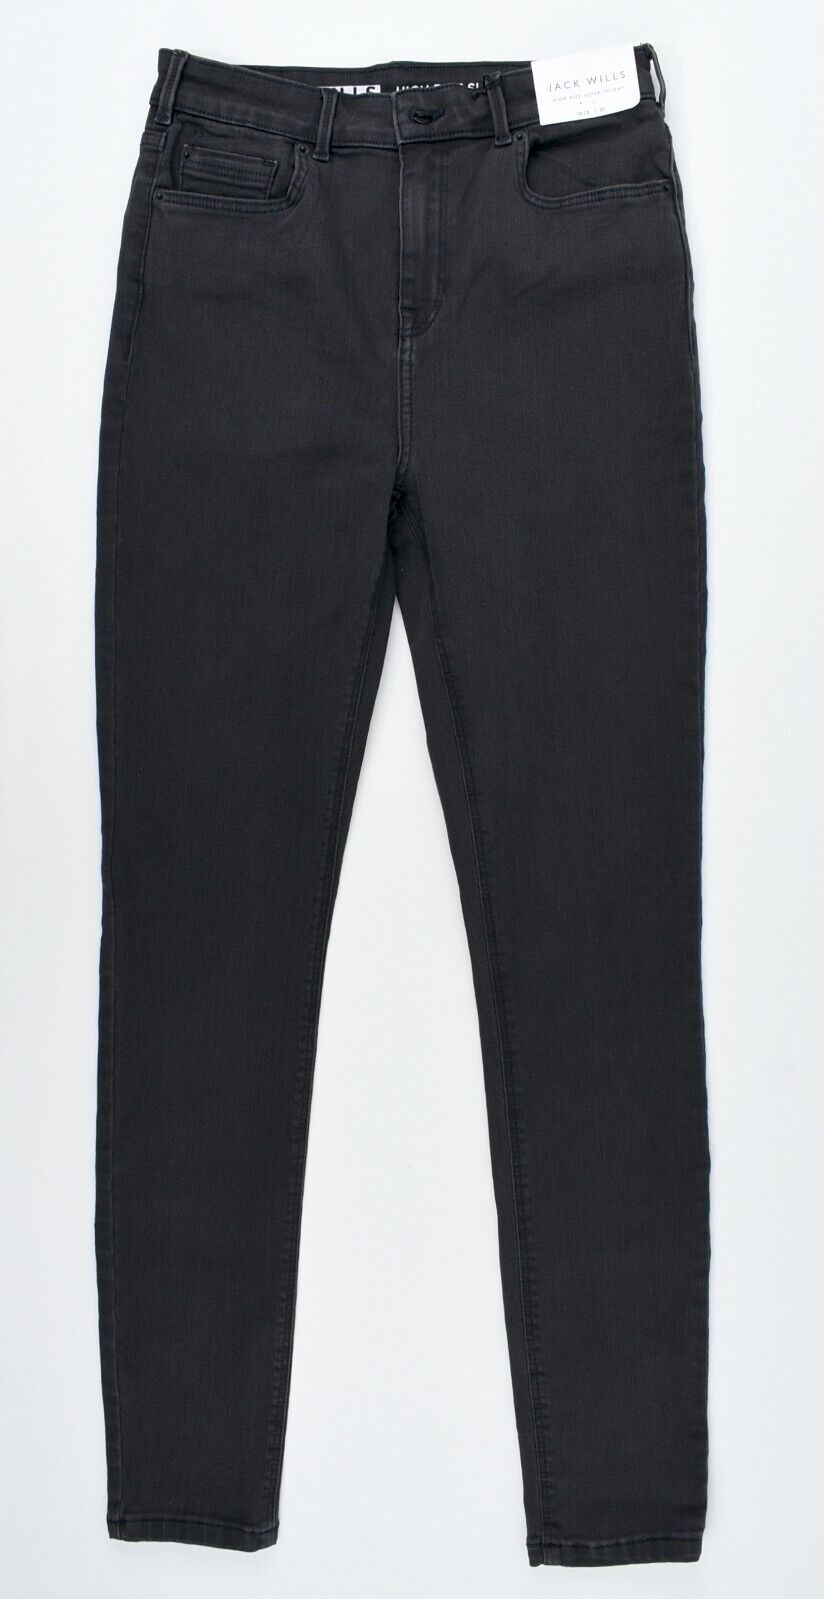 JACK WILLS Women's JAGGER High Rise Super Skinny Jeans, Black, size W28 L30